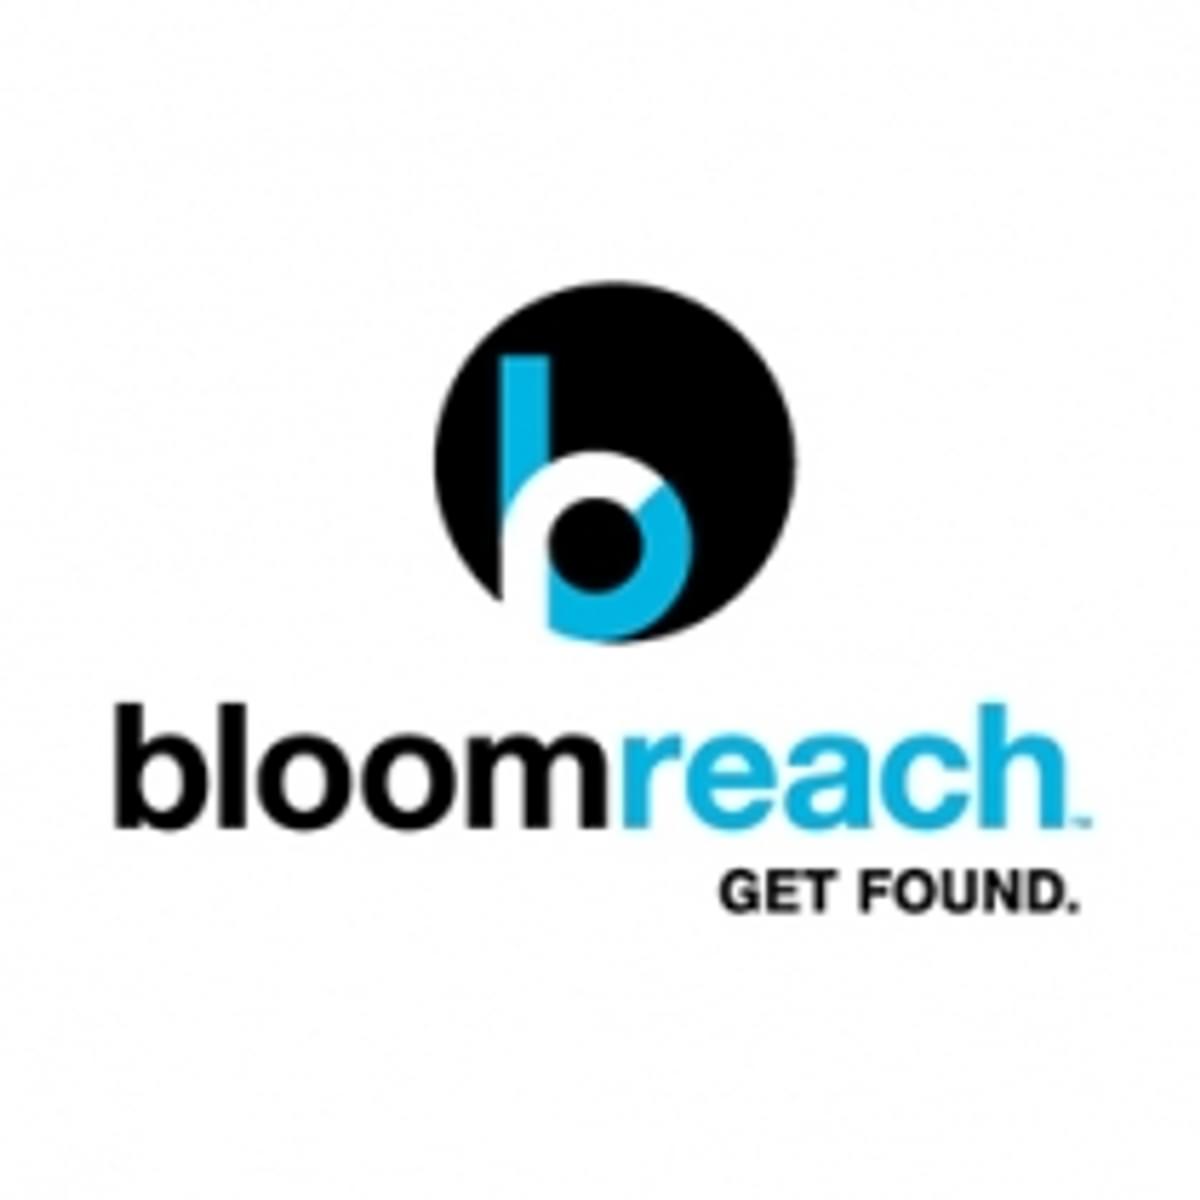 Bloomreach koopt Exponea en haalt flink kapitaal op image